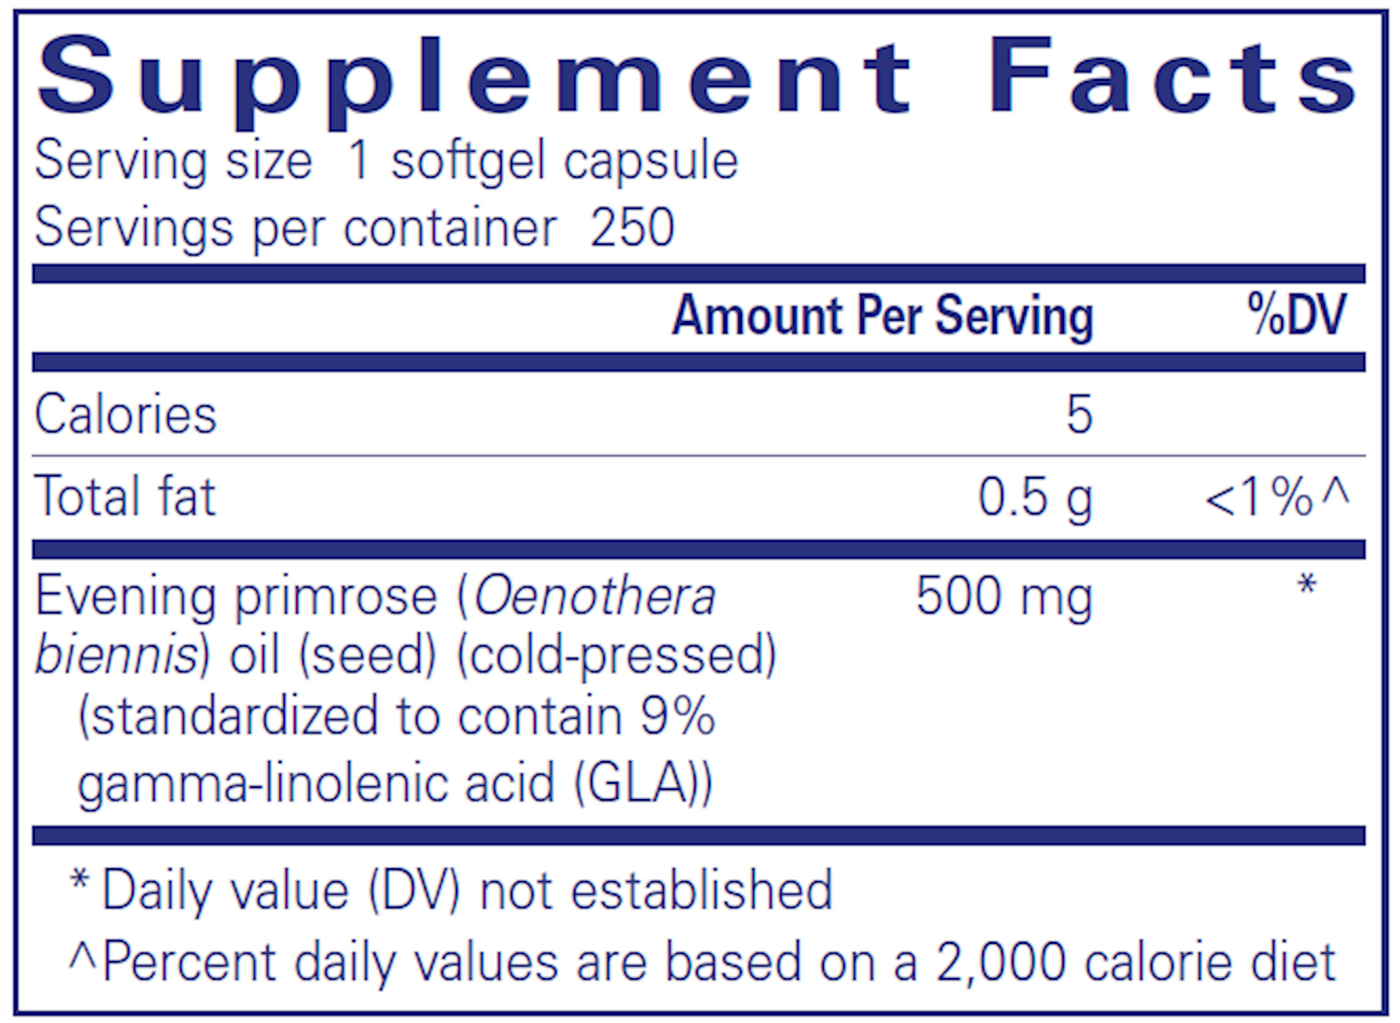 E.P.O. (evening primrose oil) 250 gels Curated Wellness